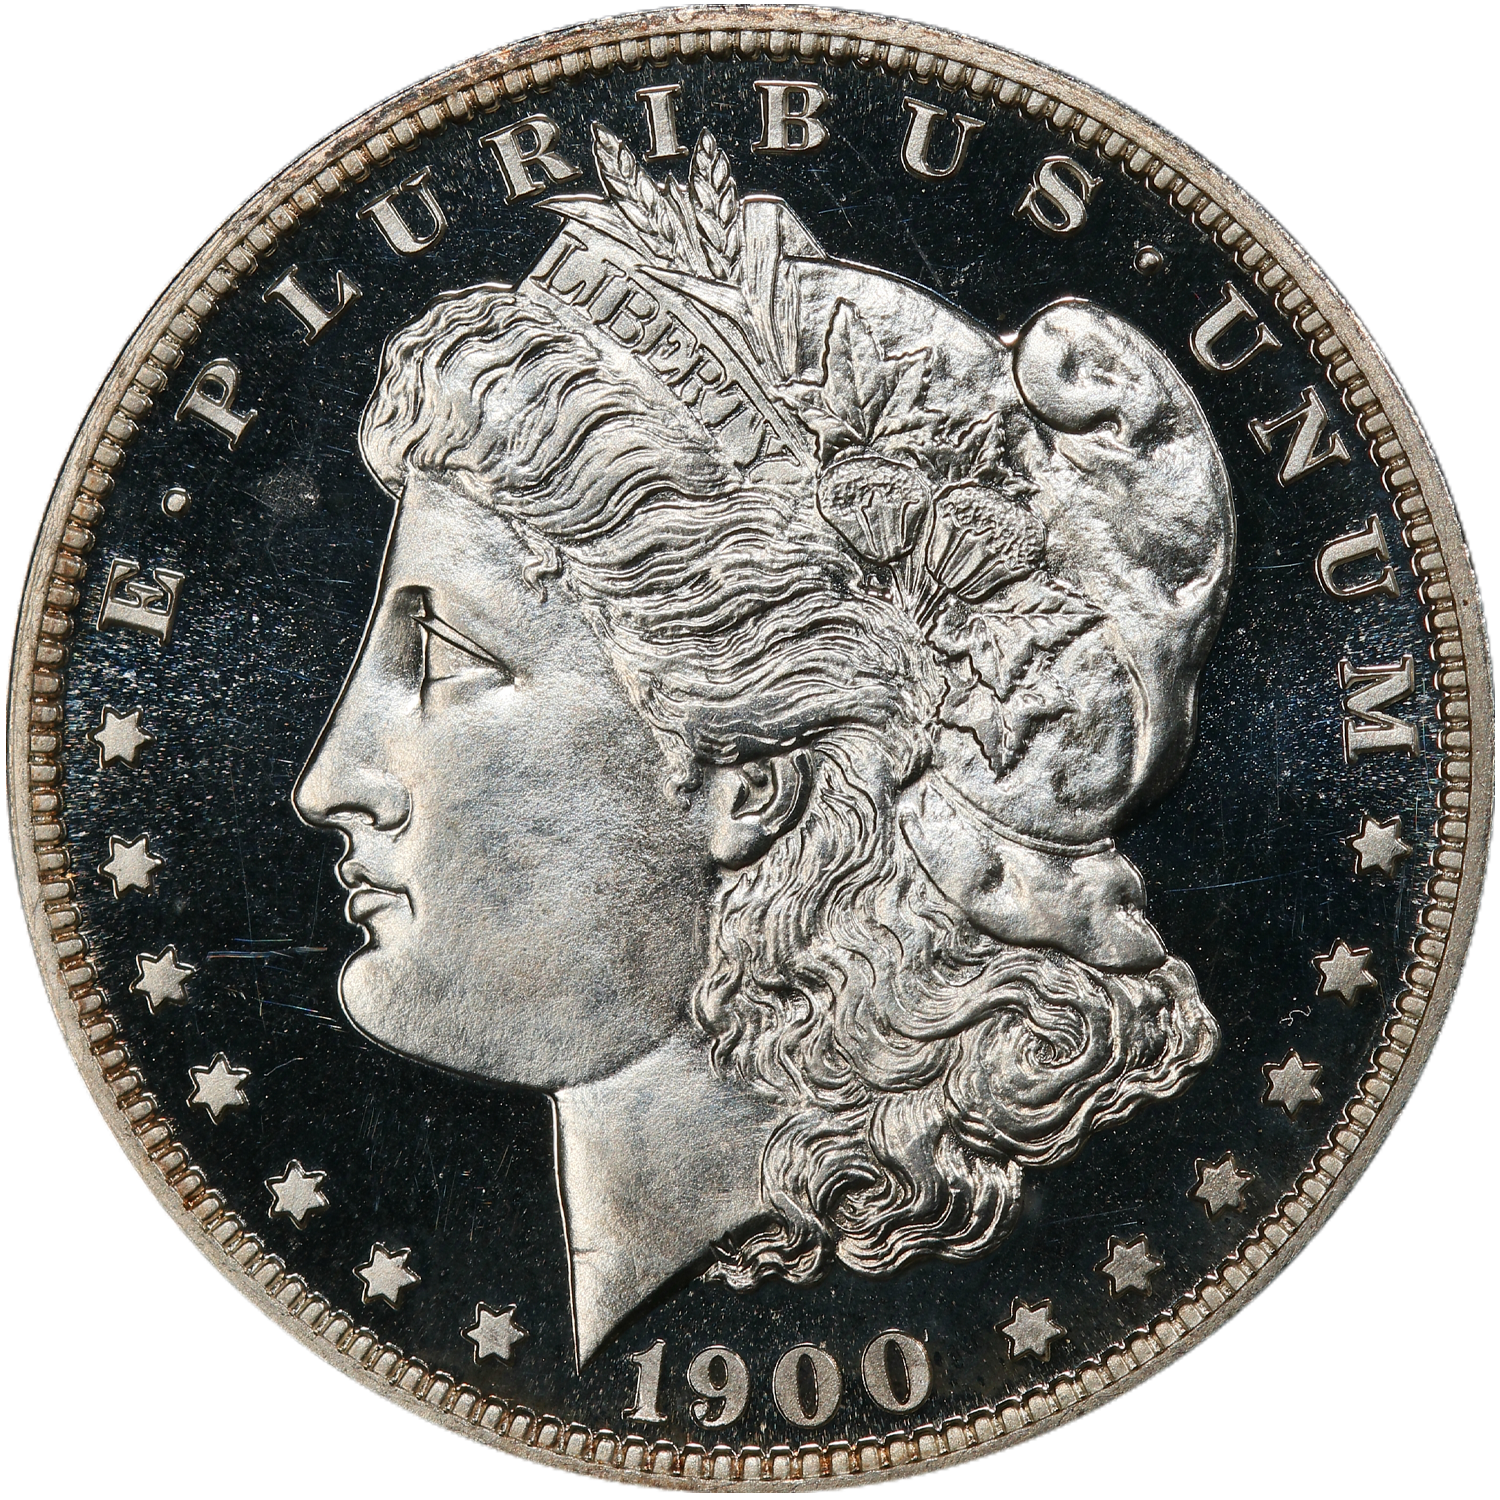 1900 p mint morgan dollar price guide value